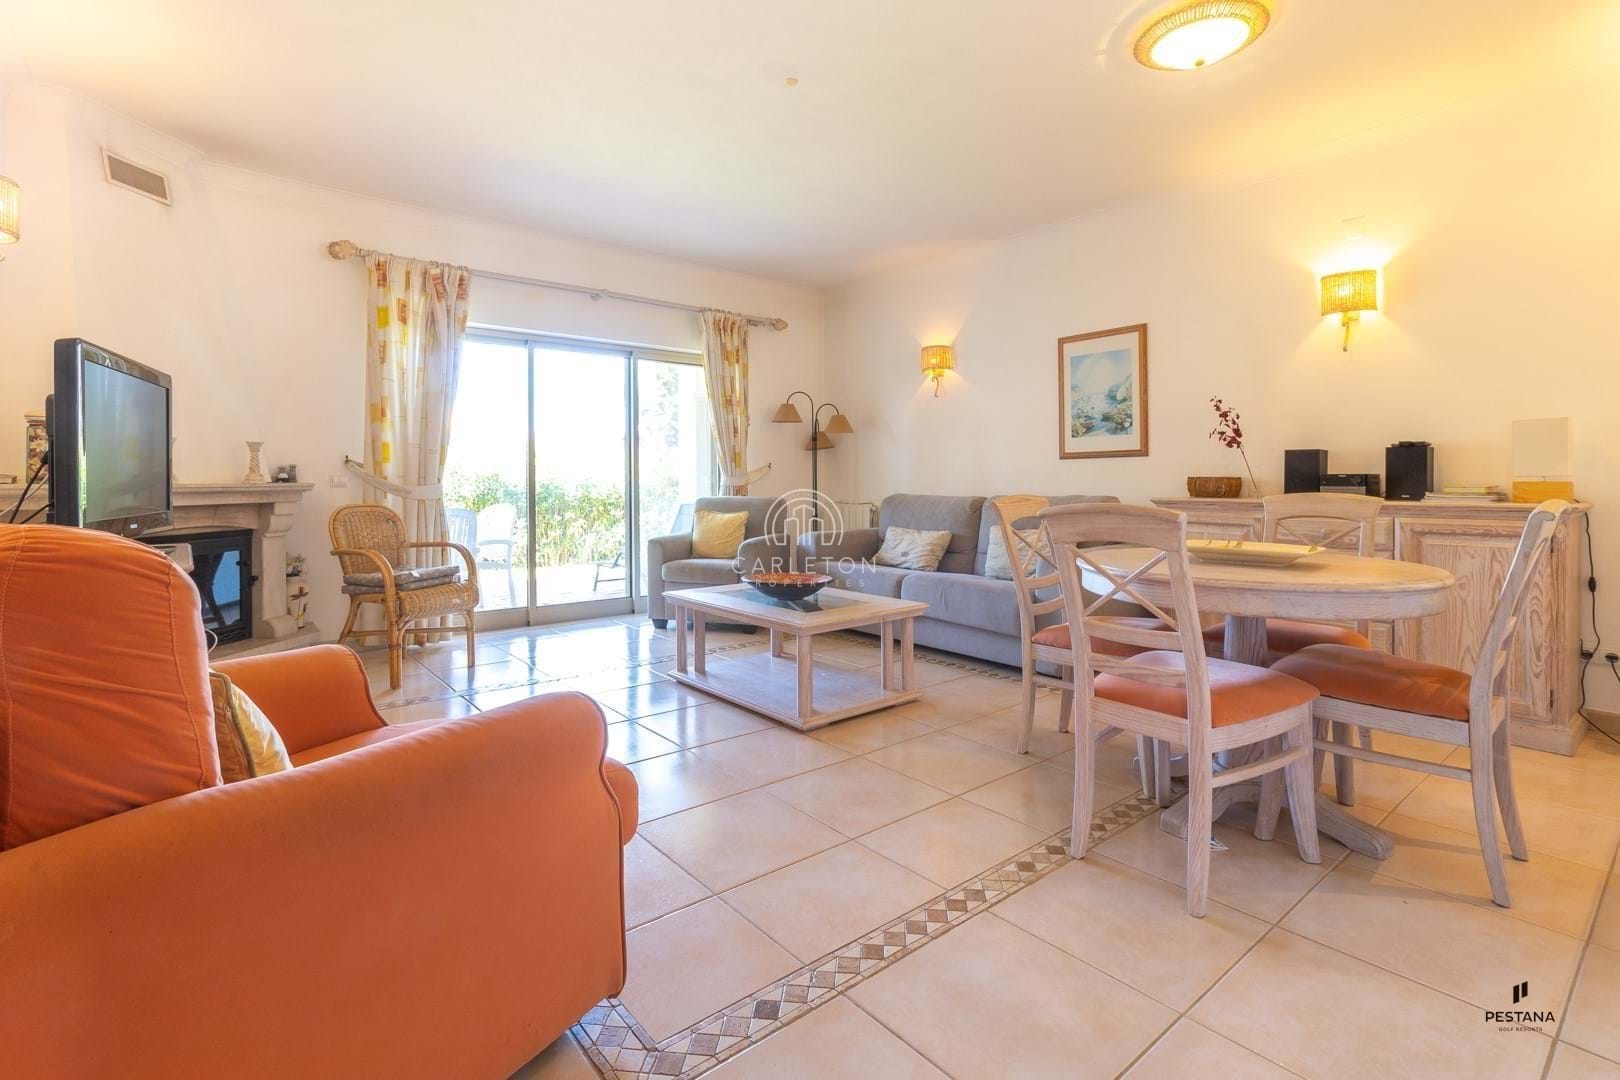 Co-ownership of 2 bedroom apartment period 'B' at Gramacho Golf Resort - Algarve